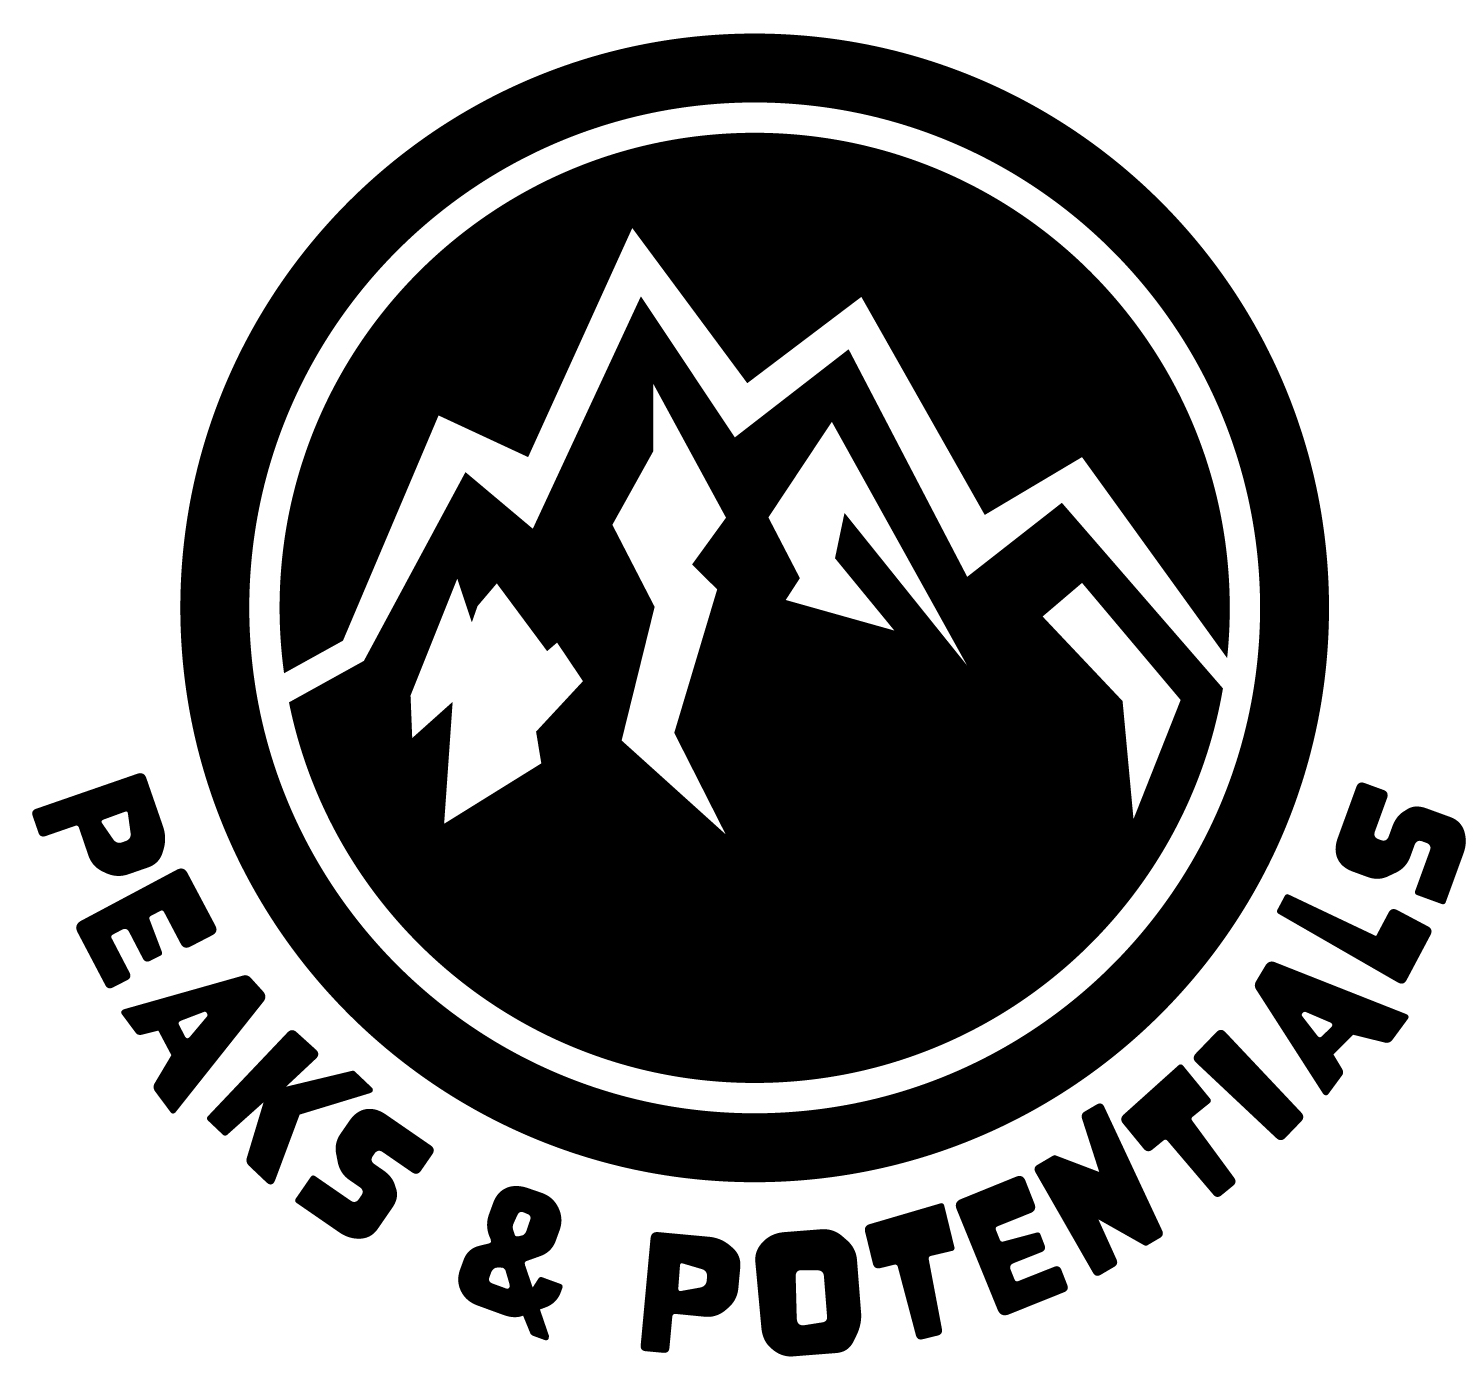 Peaks & Potentials logo